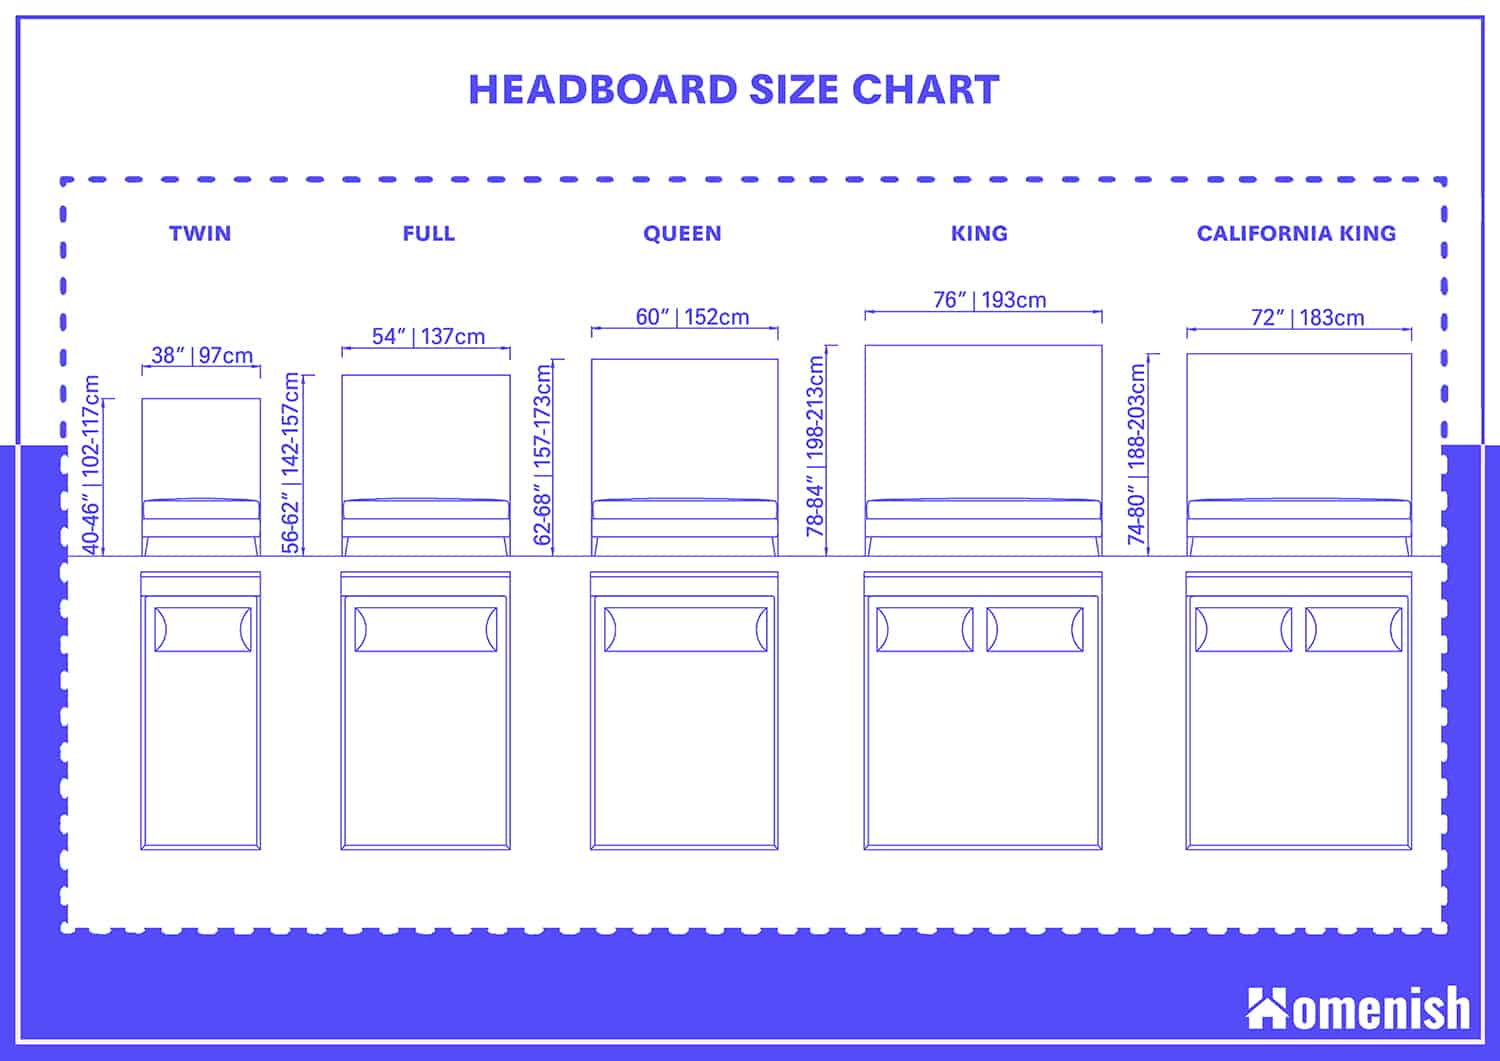 Standard Headboard Dimensions, How Wide Is A Twin Bed Headboard